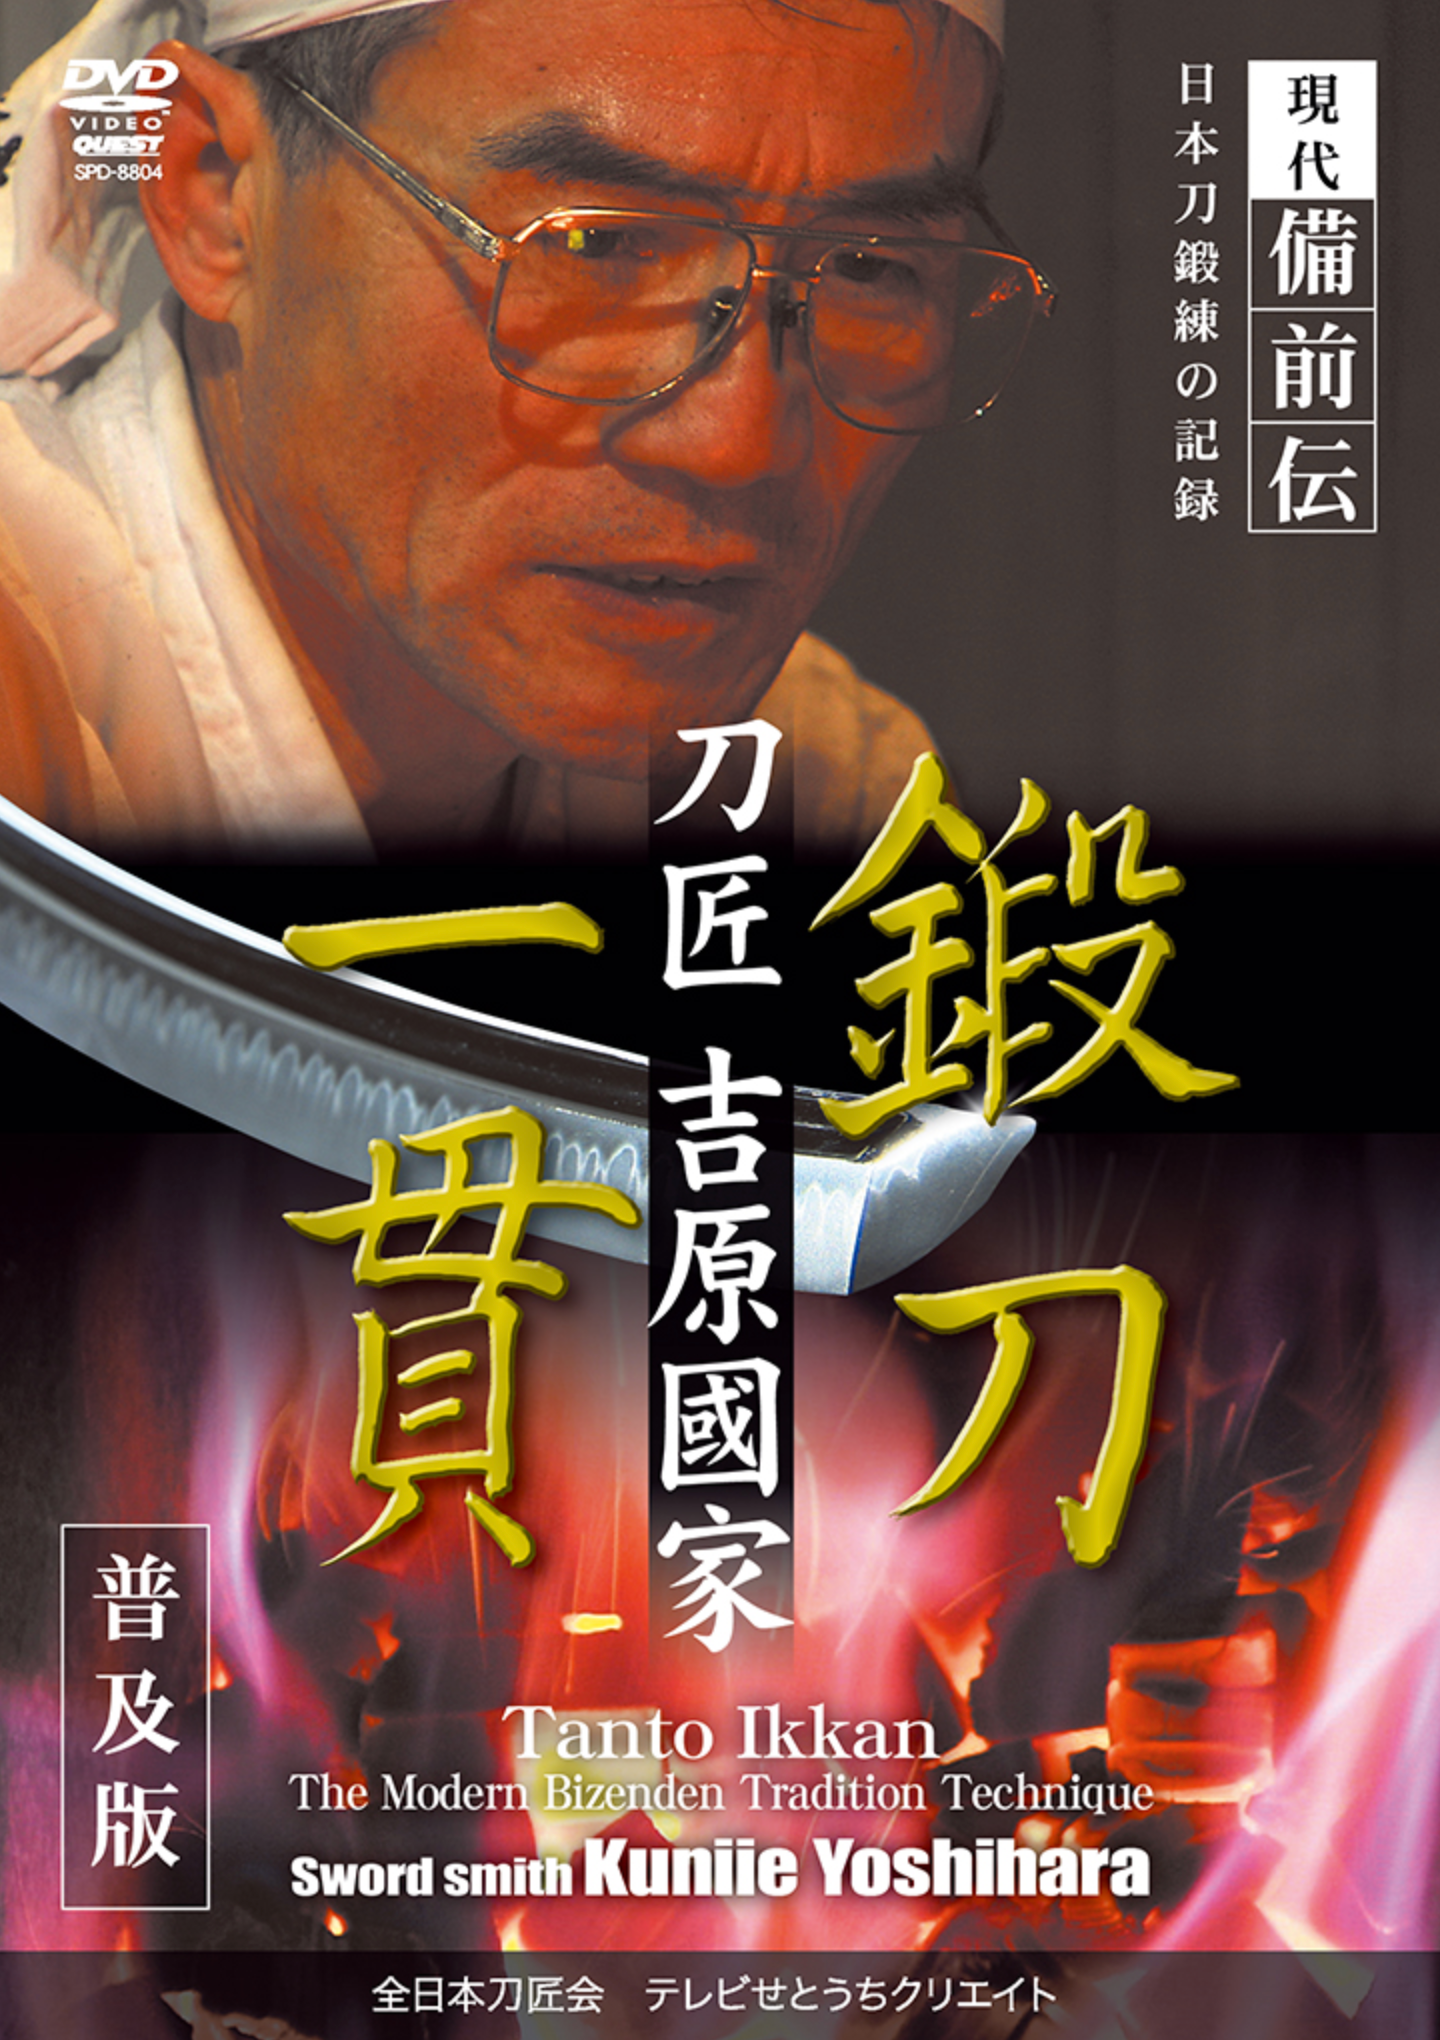 Tanto Ikkan: Modern Bizenden Tradition Techniques DVD by Kuniie Yoshihara - Budovideos